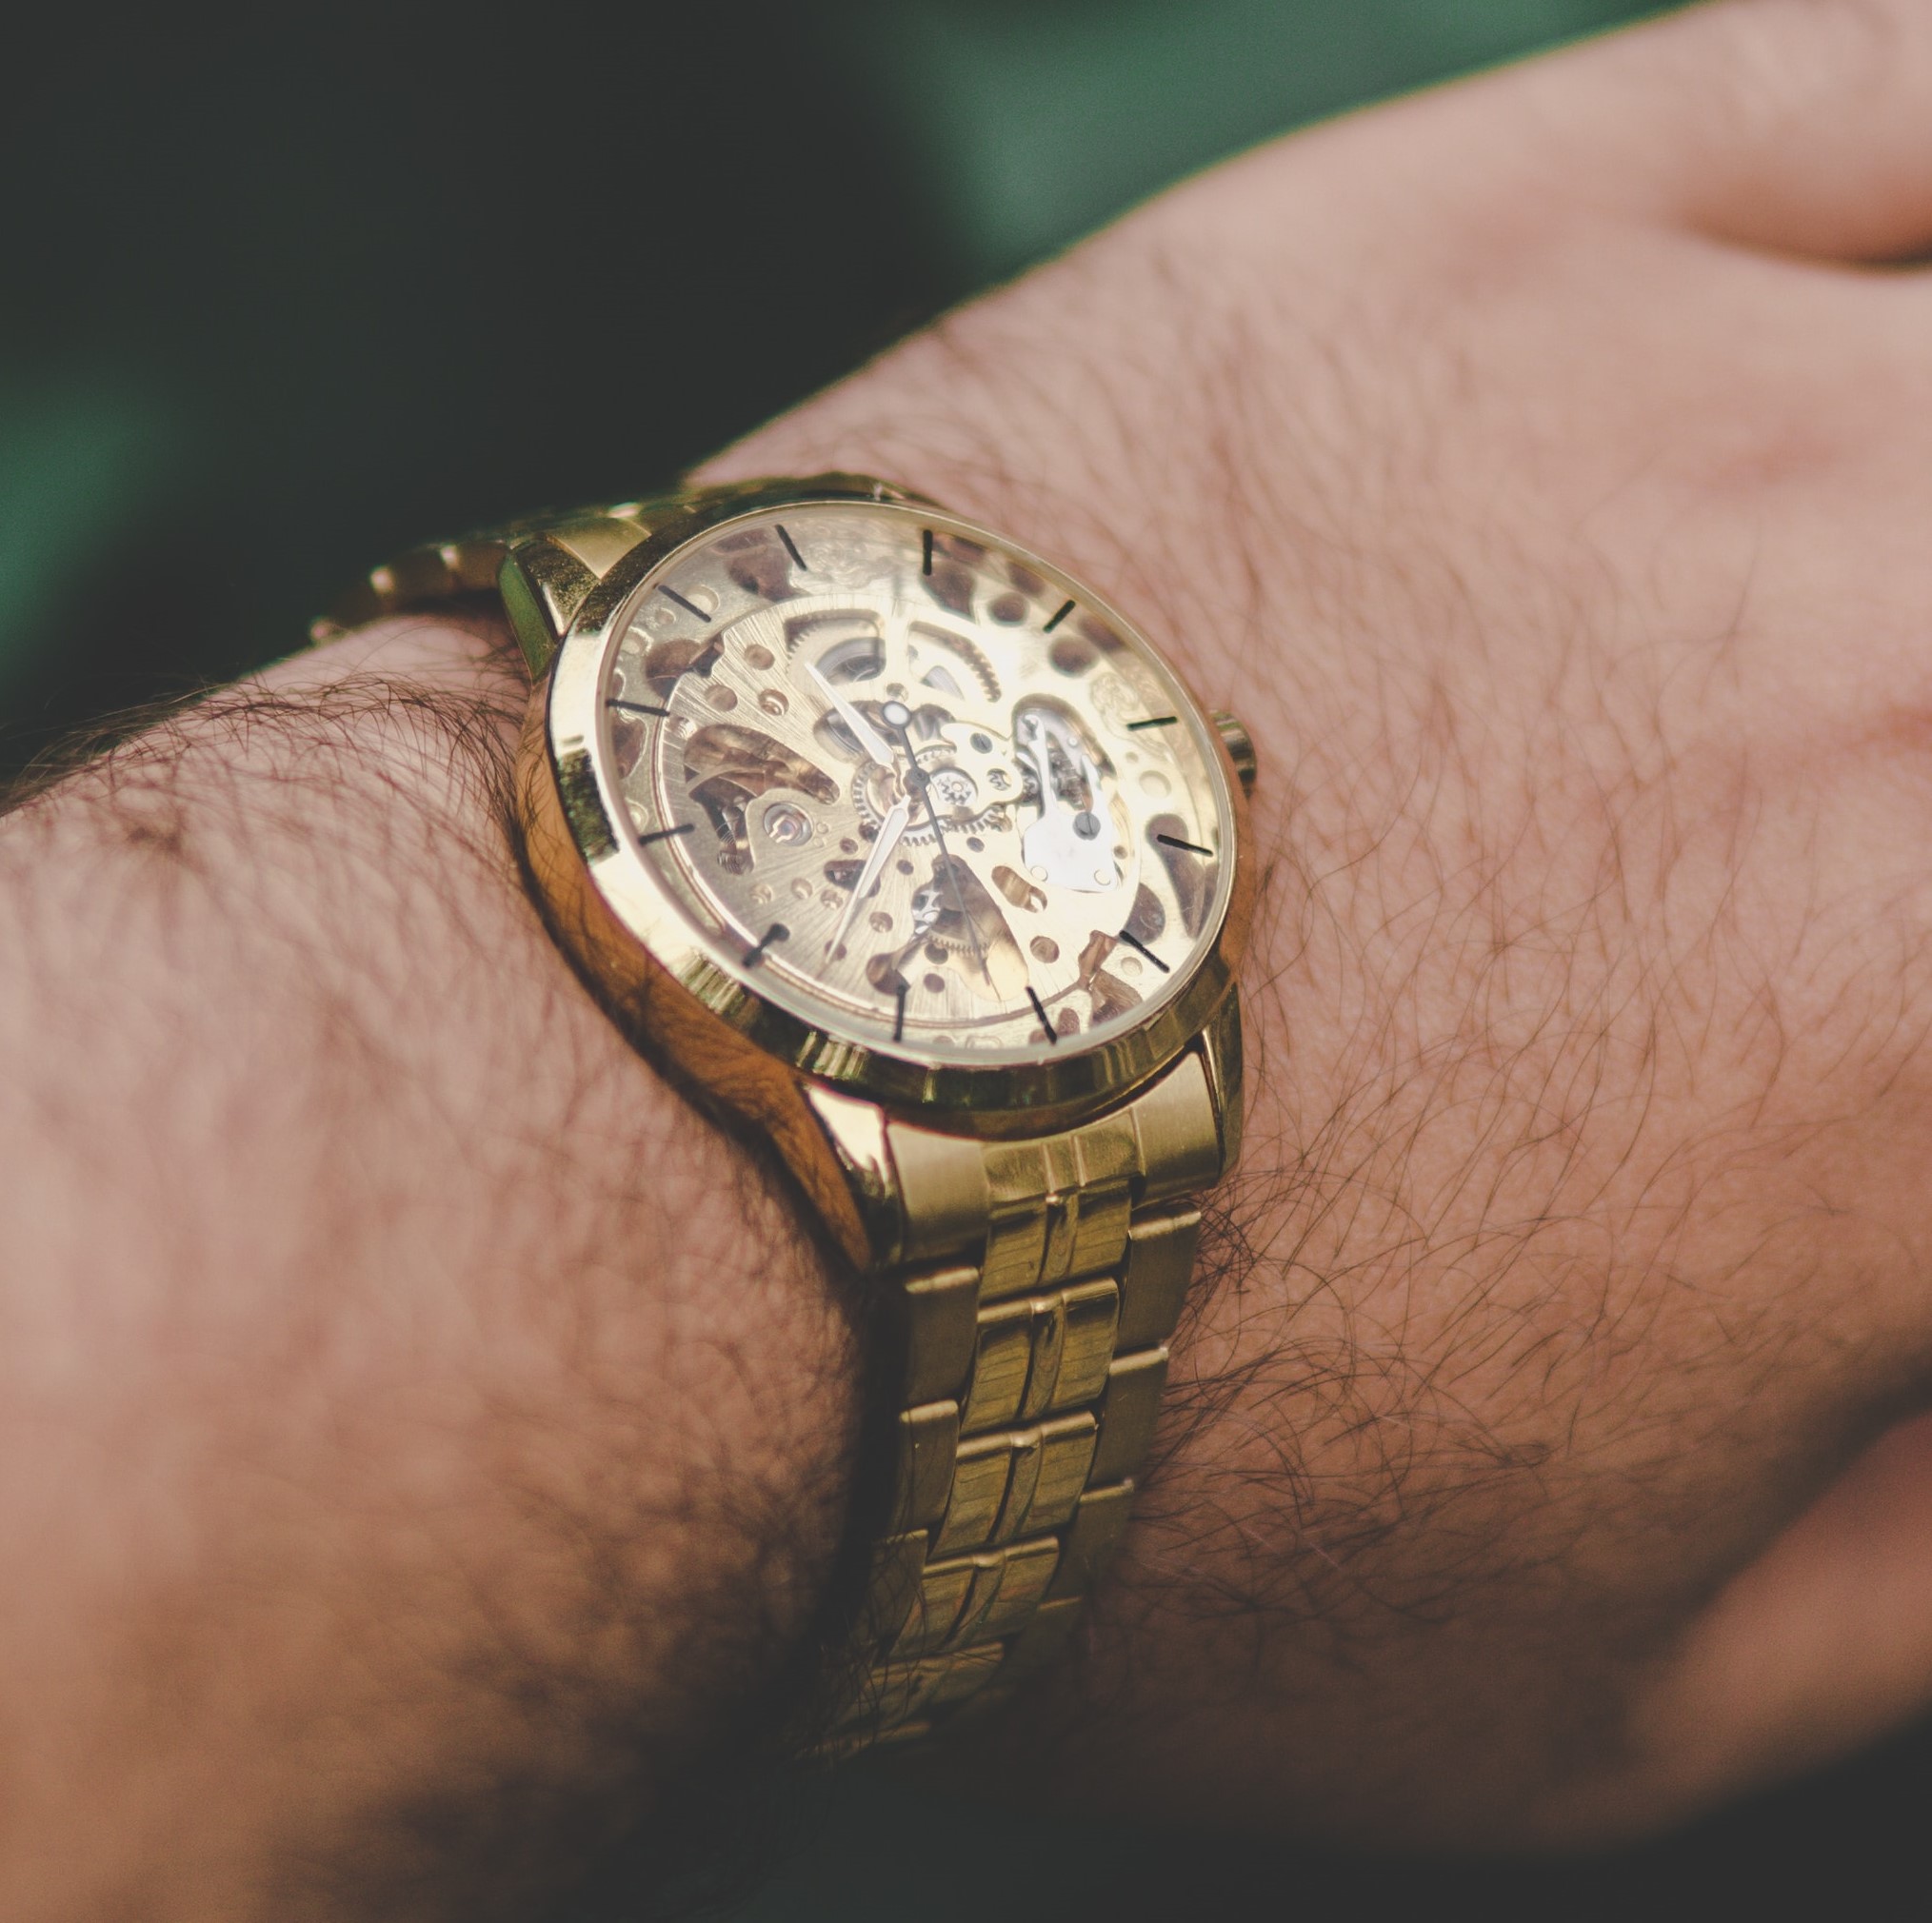 A sample gold chain band wrist watch